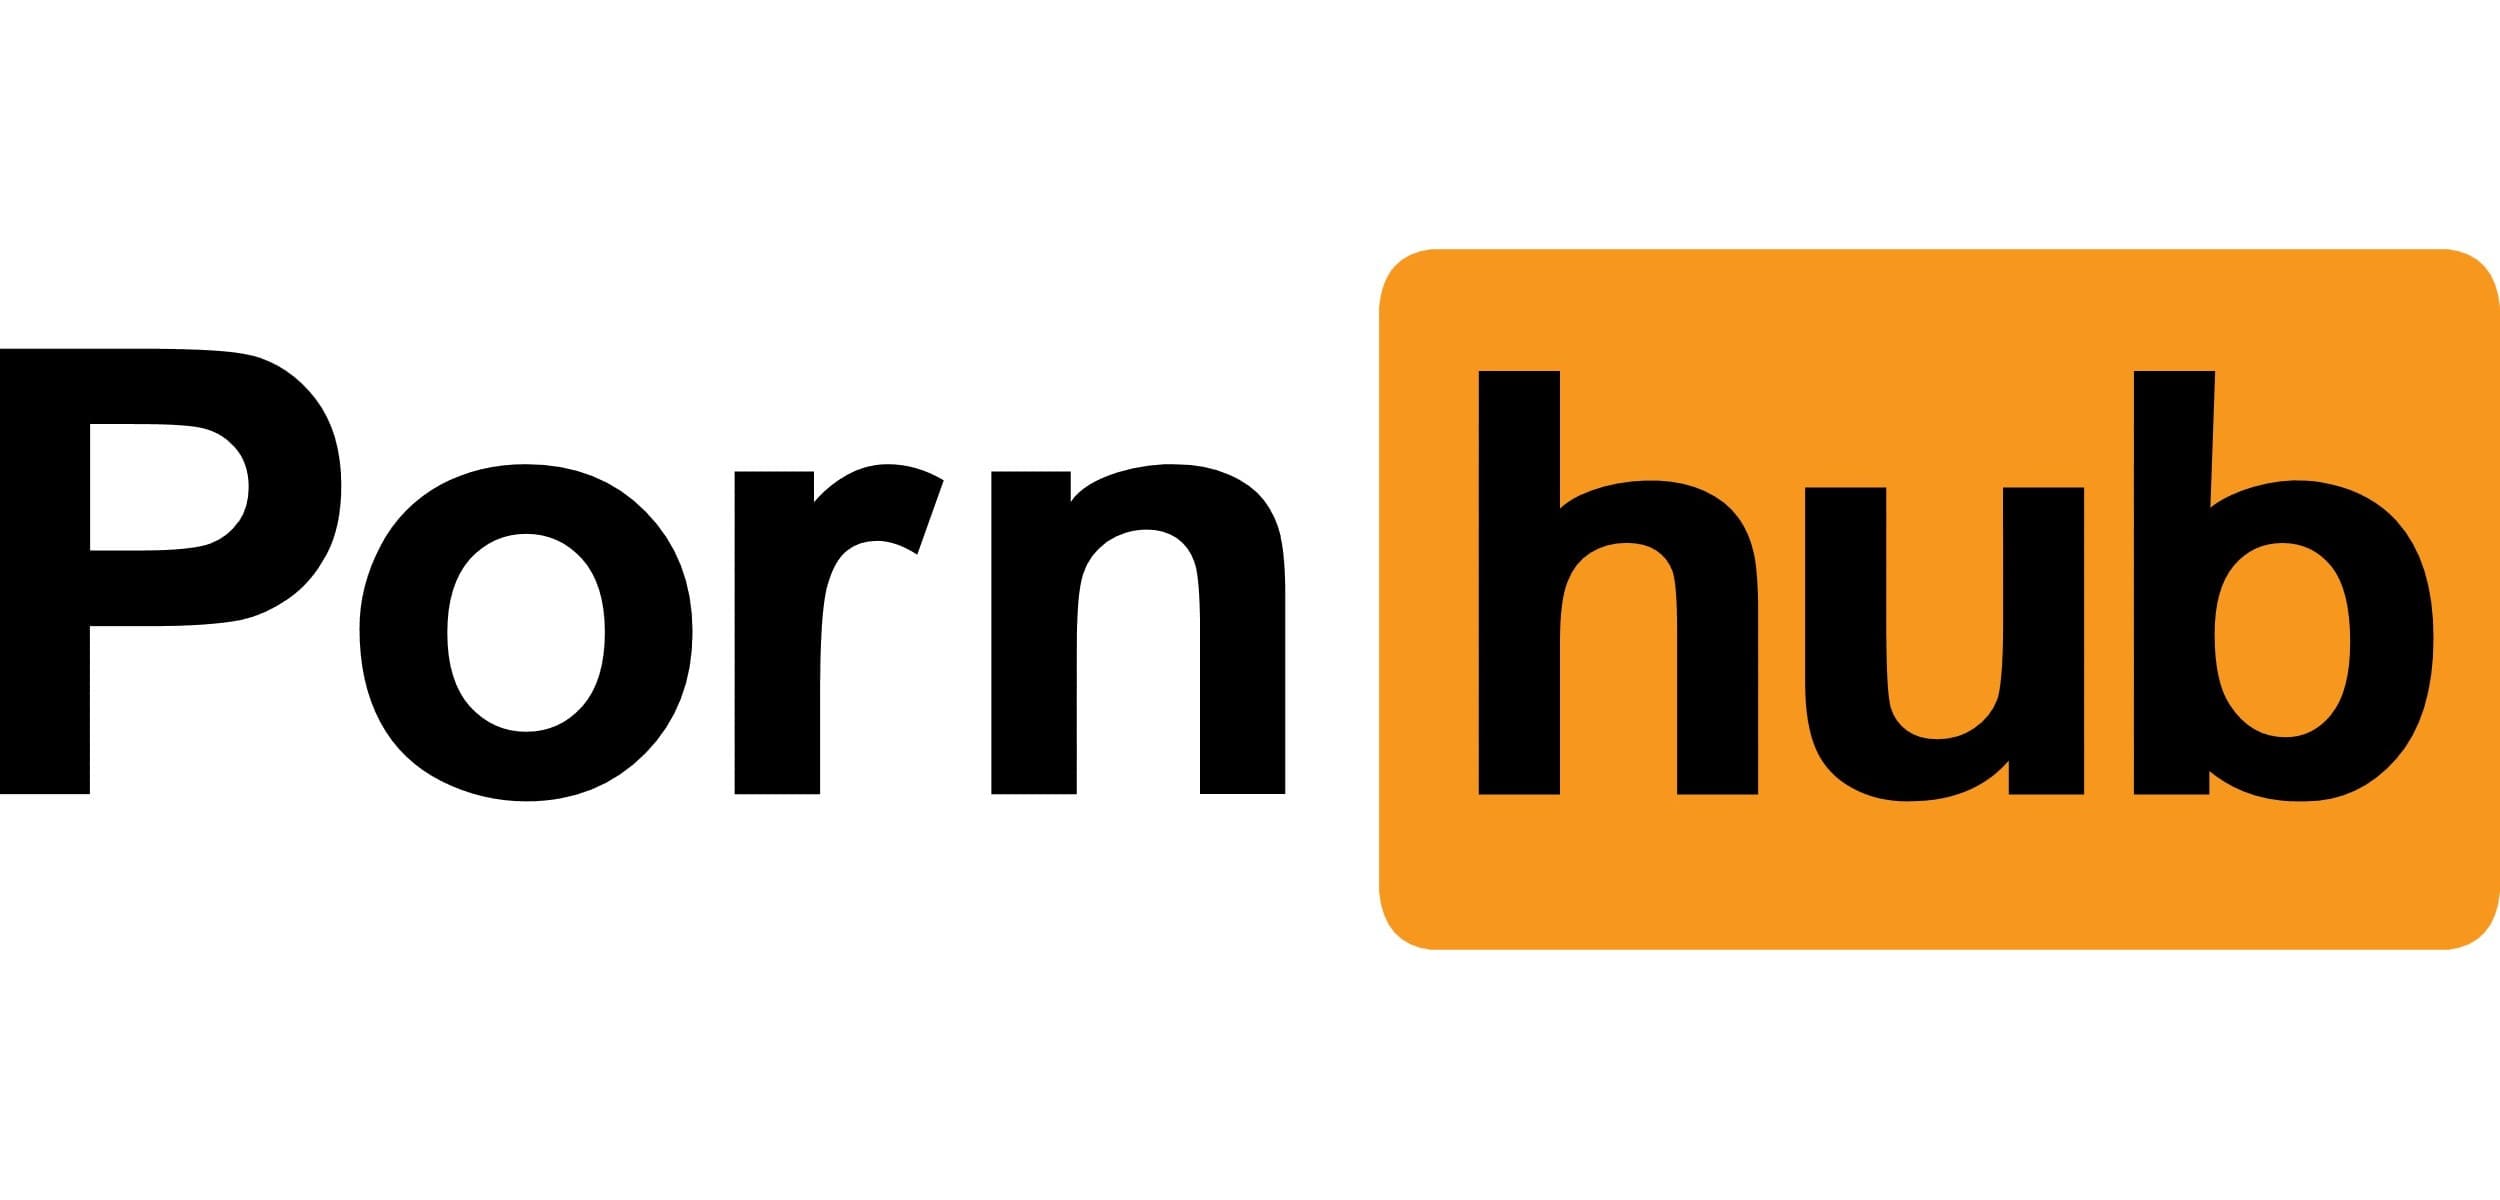 Best porn companies